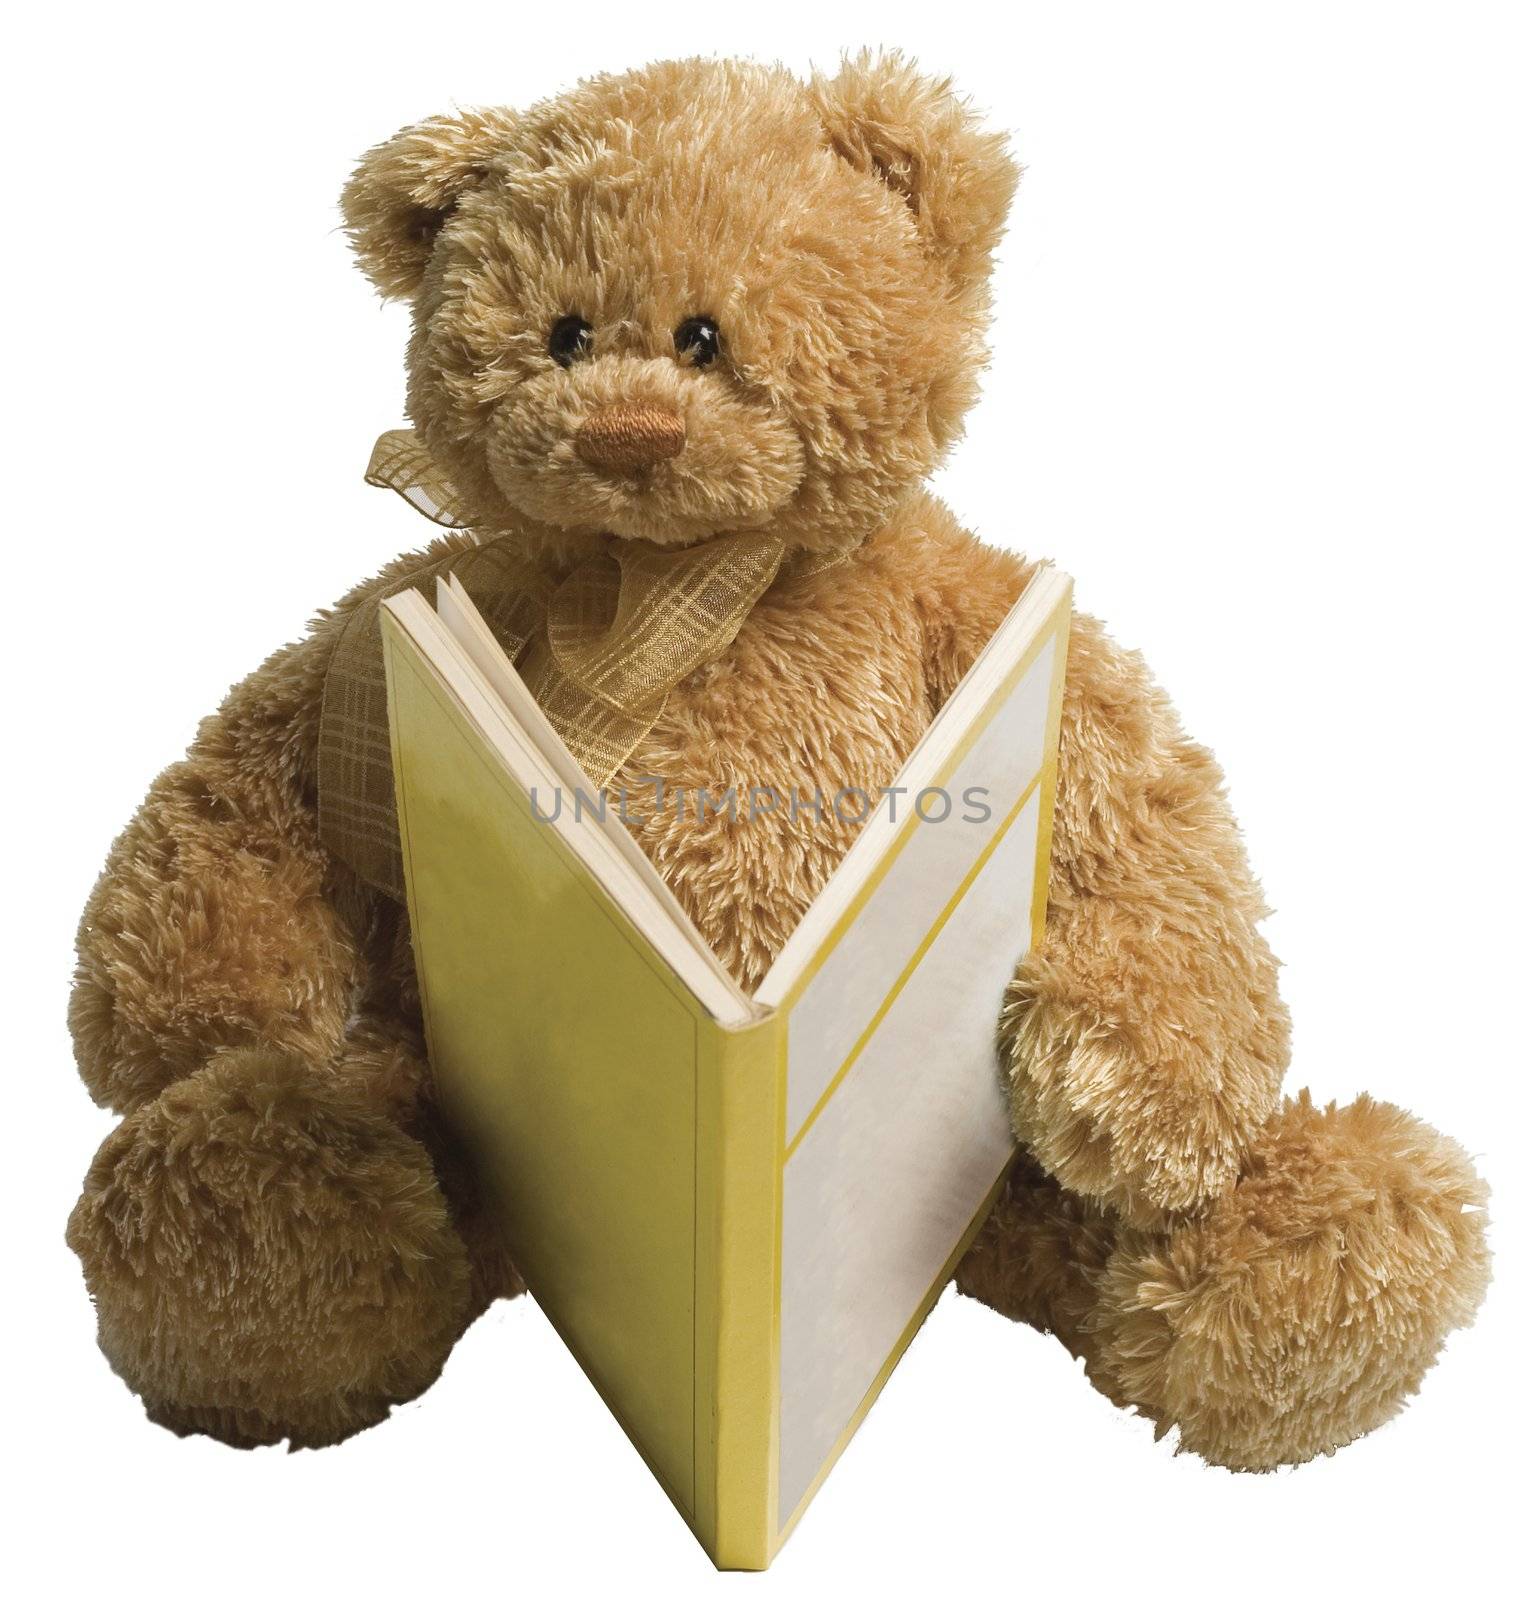 Small teddy bear reading a yellow book